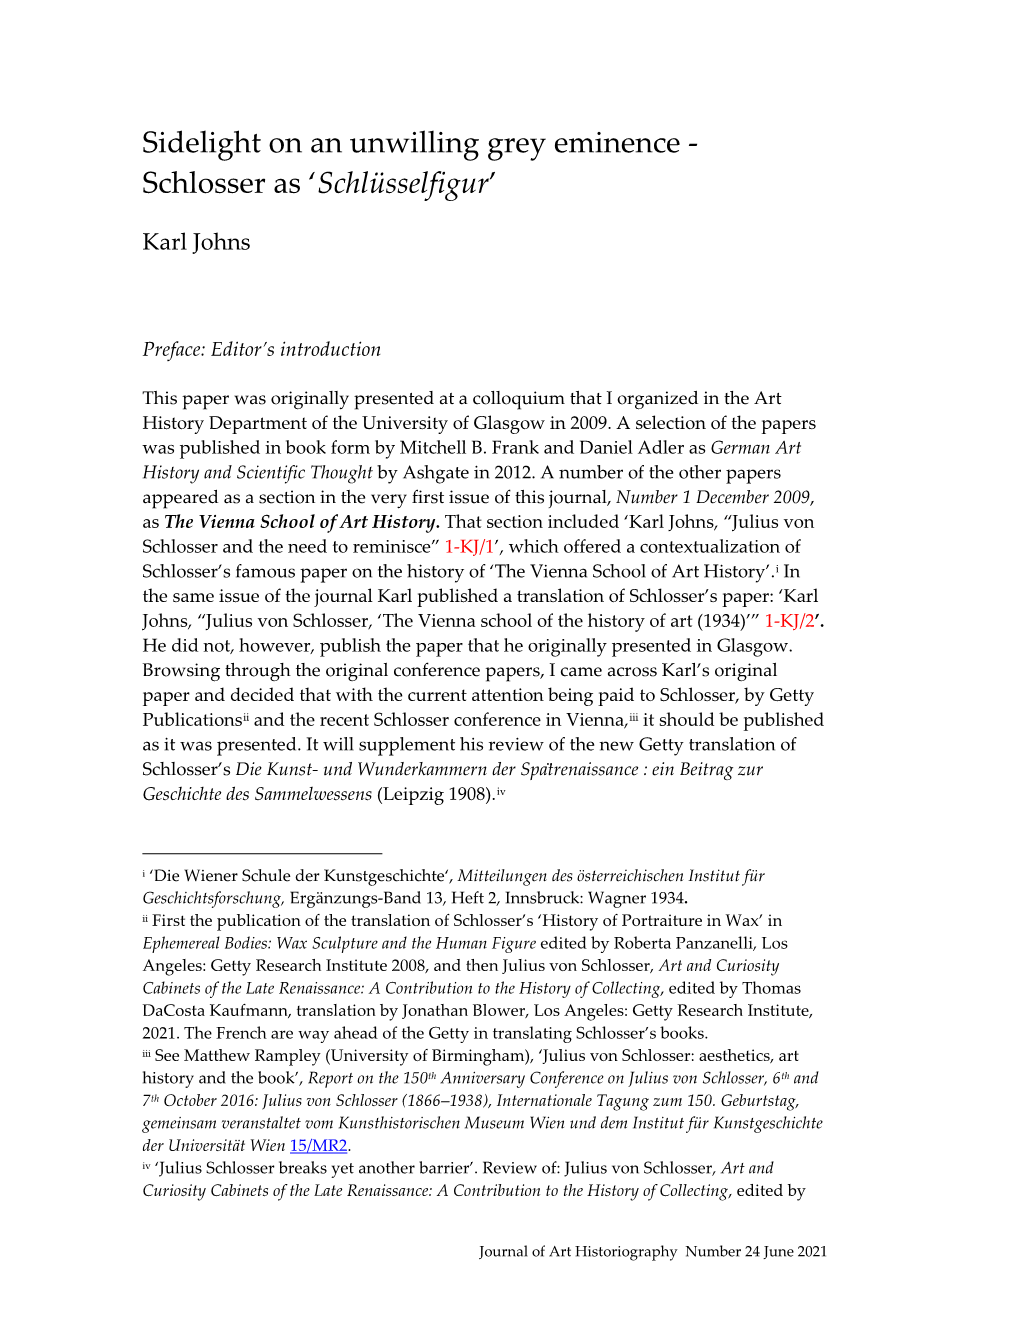 Karl Johns: Sidelight on an Unwilling Grey Eminence - Schlosser As ‘Schlüsselfigur’, Viennese Art Historiography 1854-1938, University of Glasgow, 1-4 October 2009